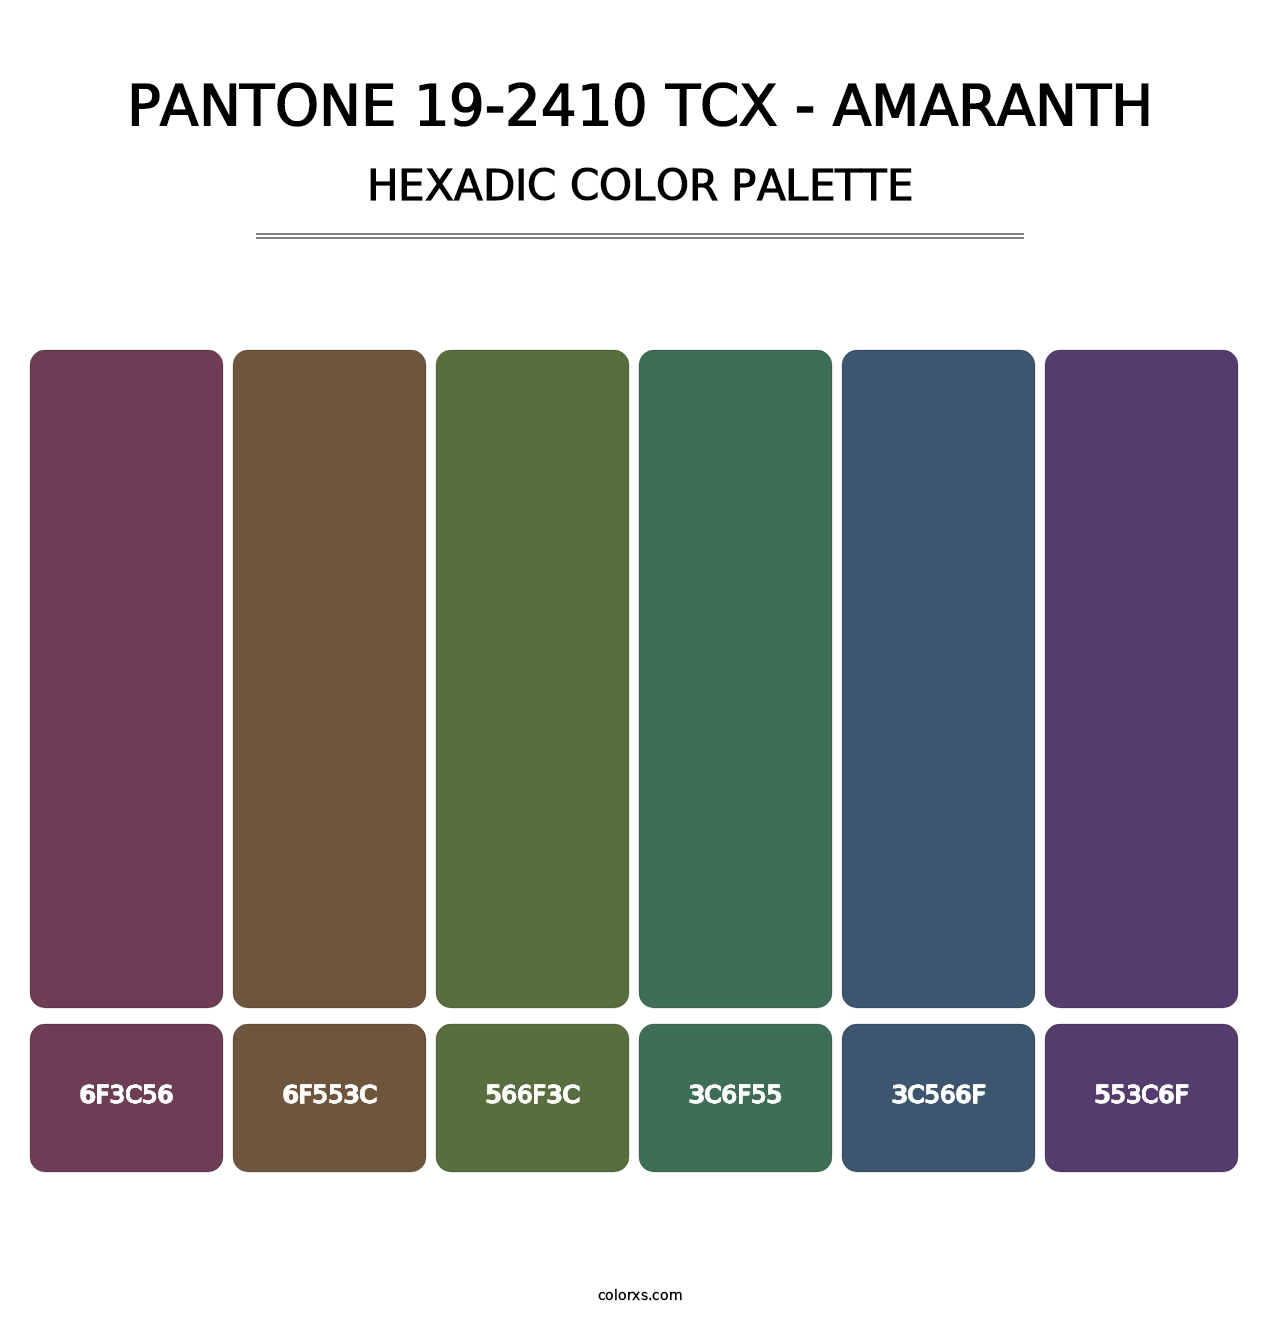 PANTONE 19-2410 TCX - Amaranth - Hexadic Color Palette